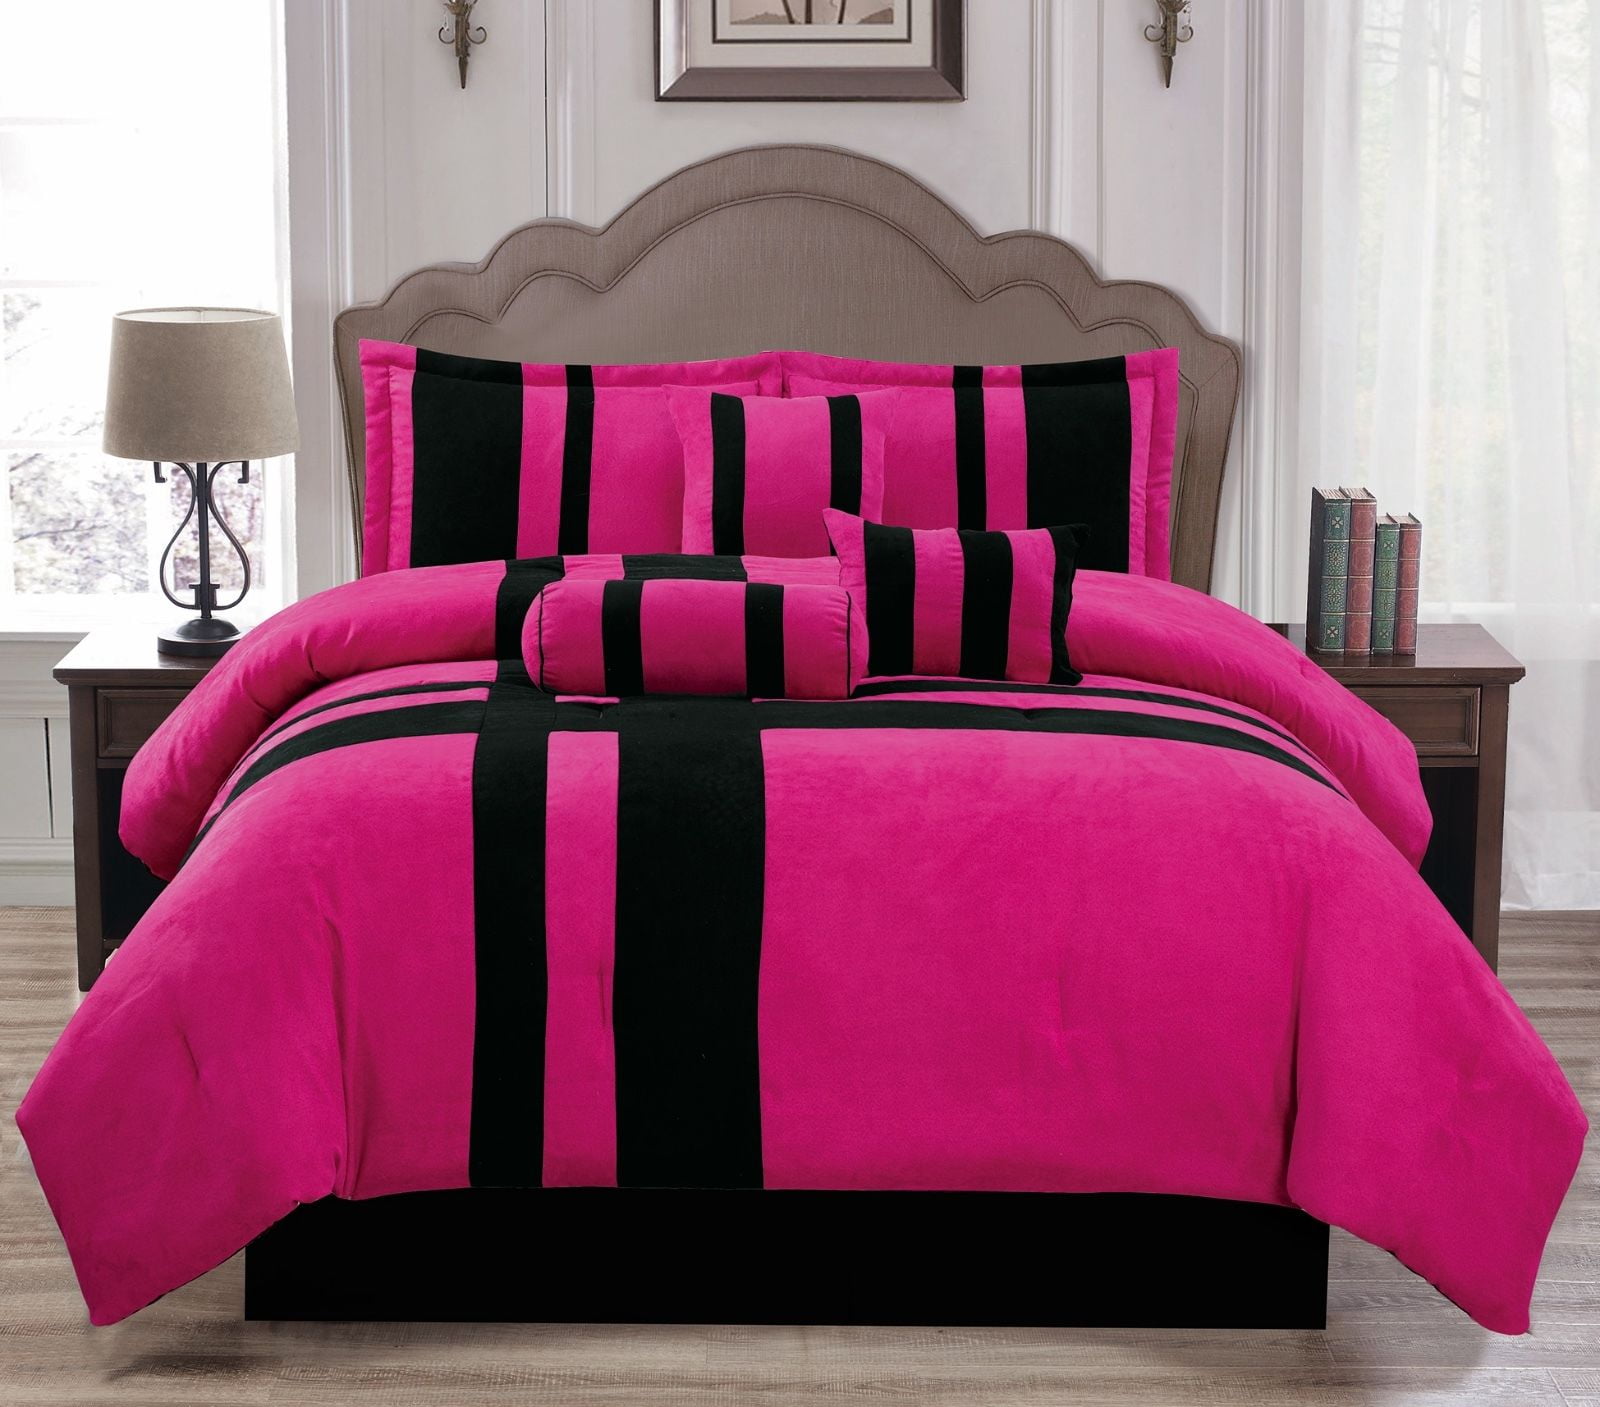 Soft Suede Pink & Black Stripe 7 Piece Comforter Set - Full Size